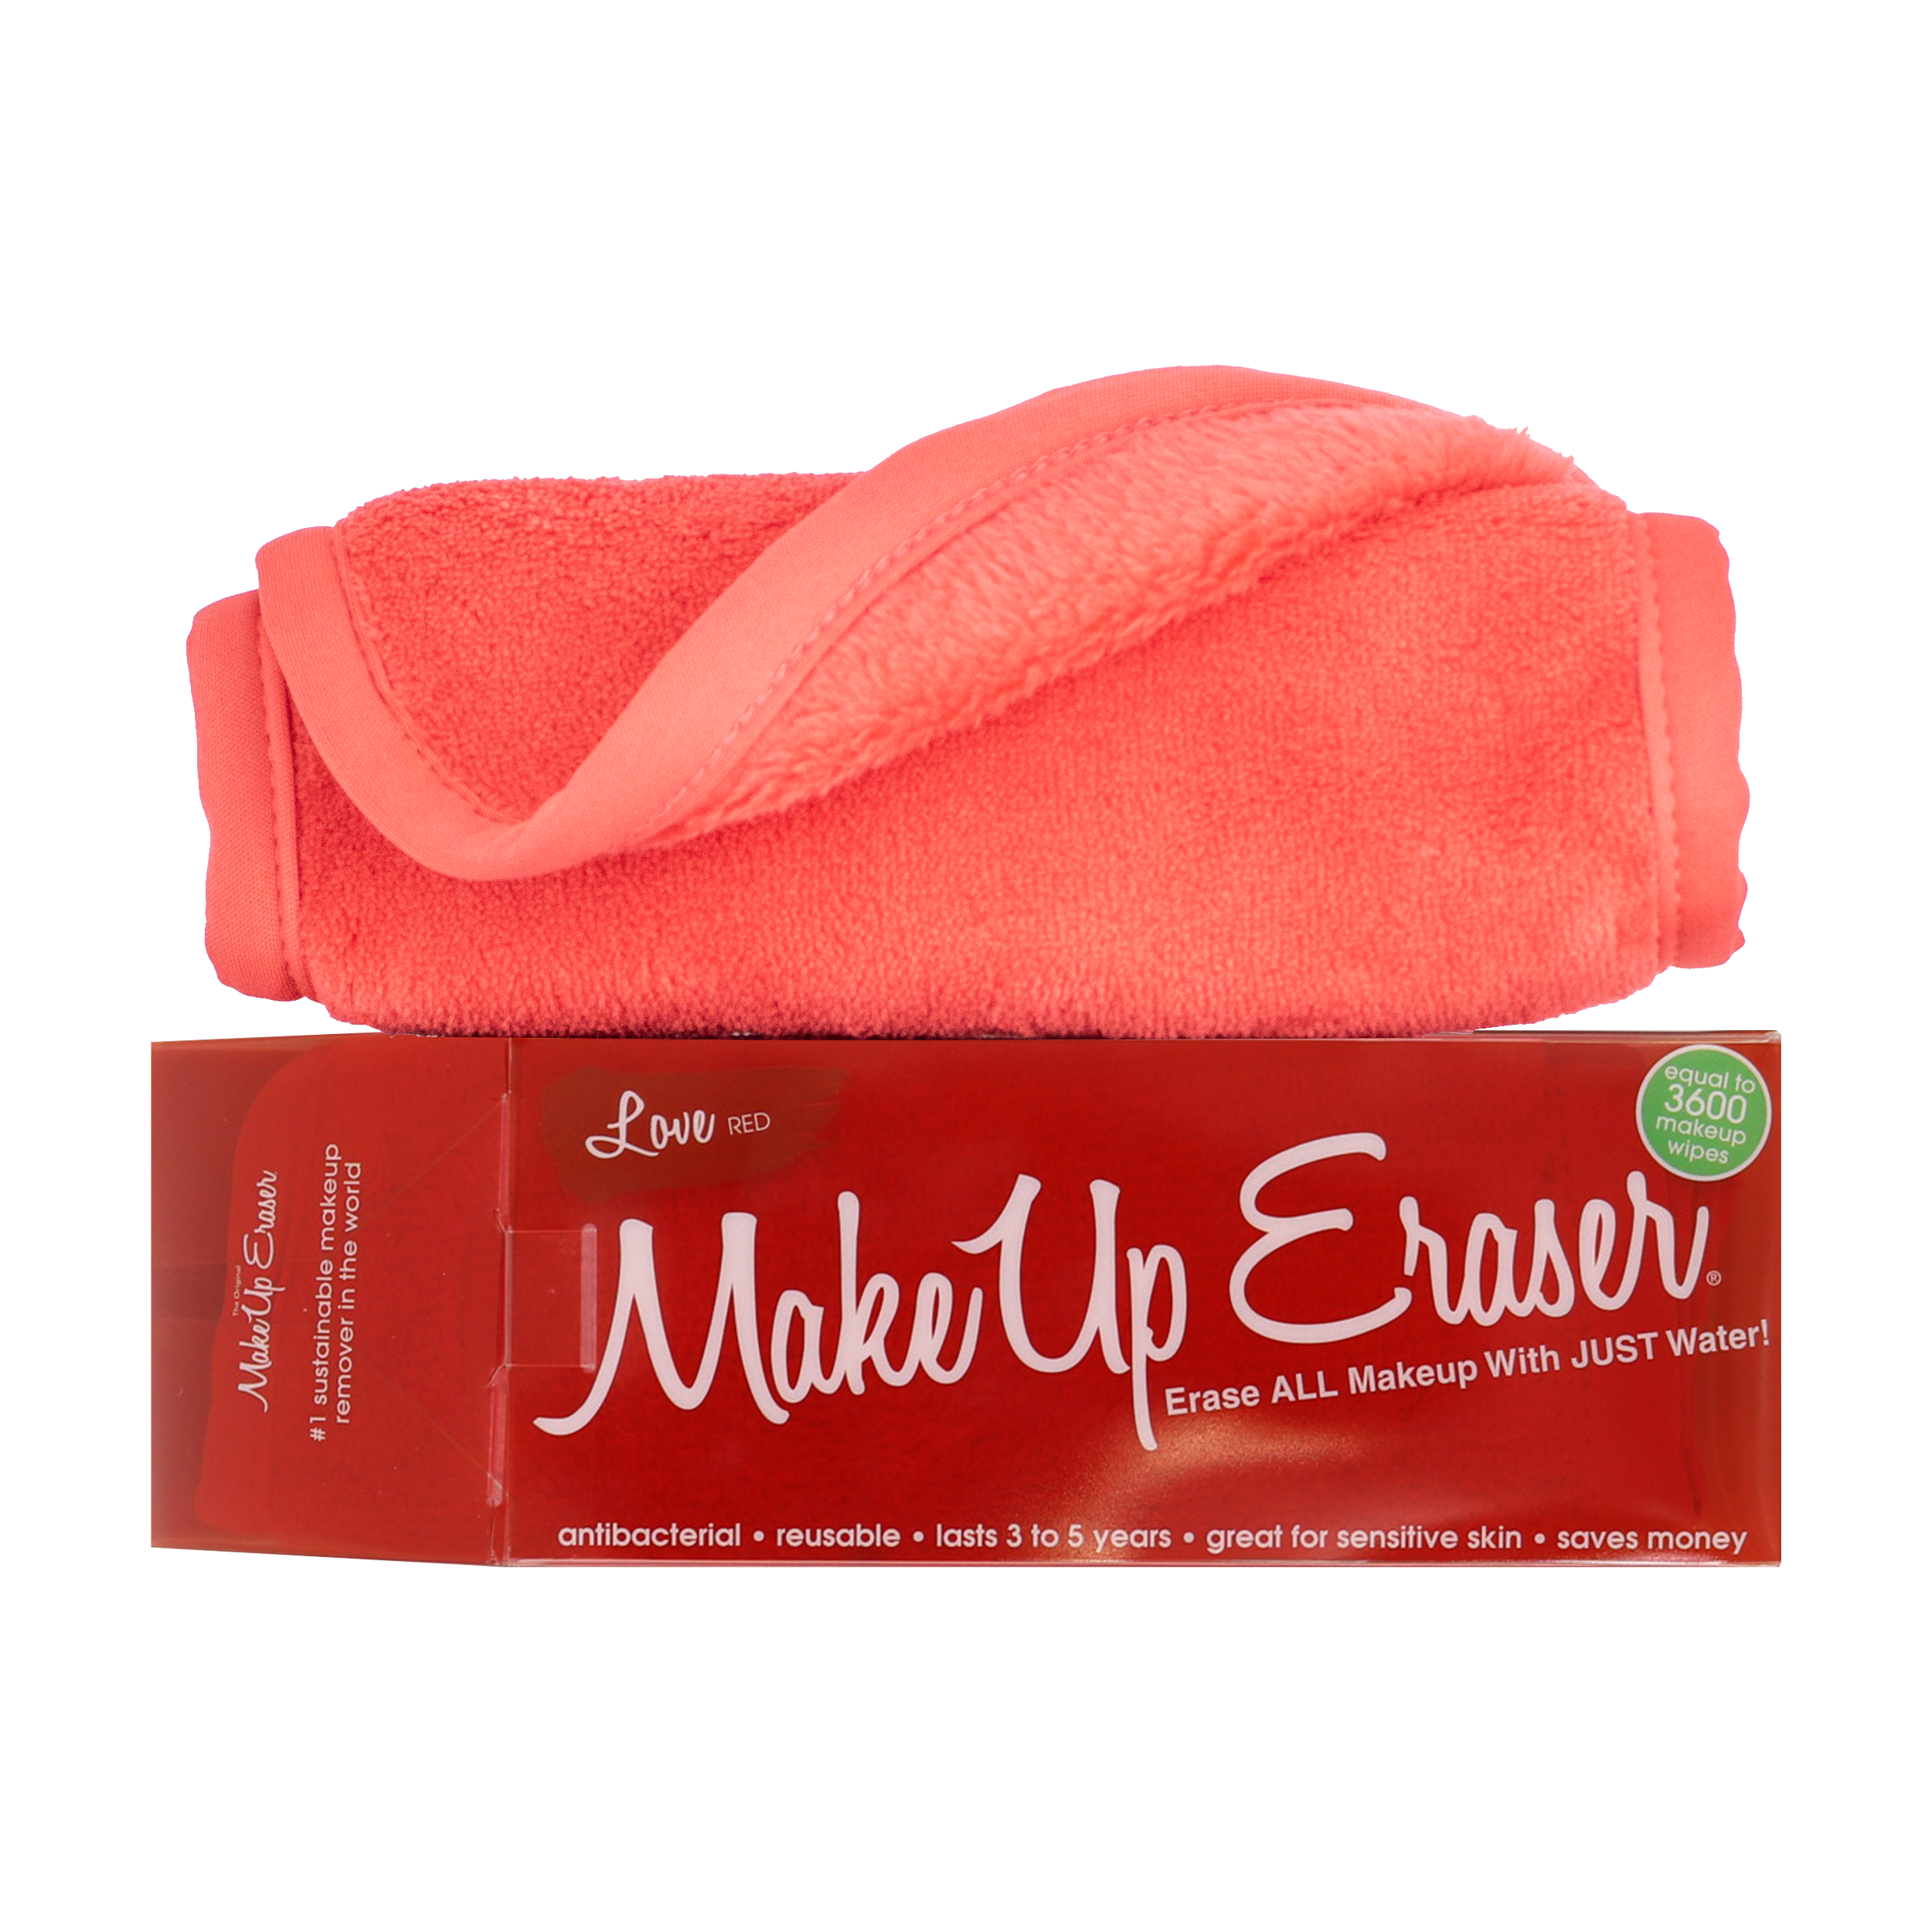 The Original Make Up Eraser